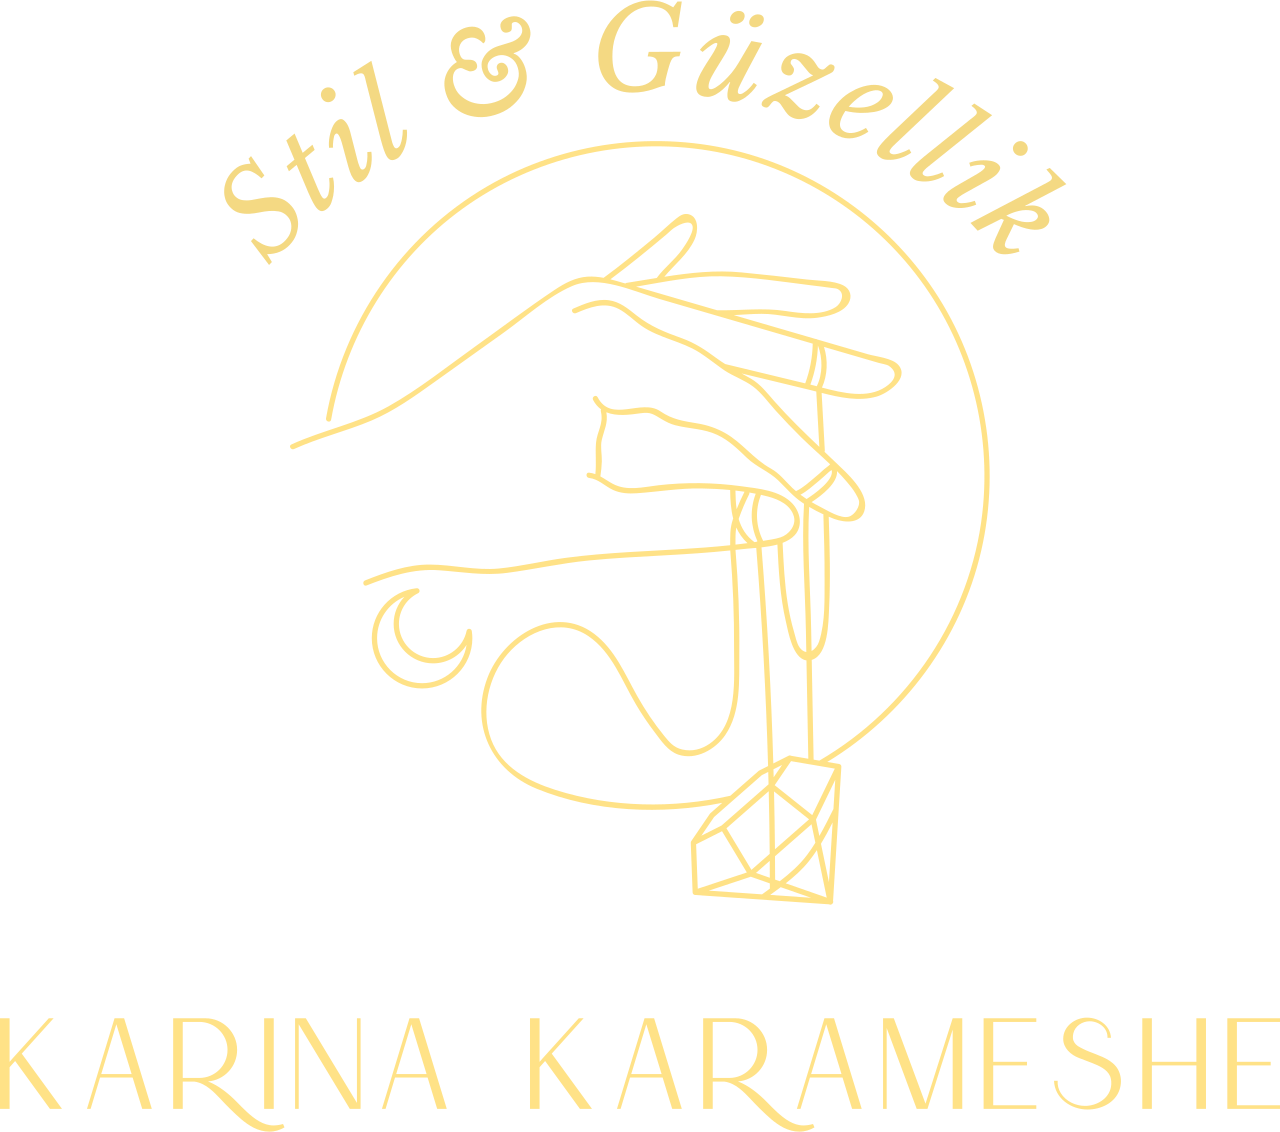 KARINA KARAMESHE's web page